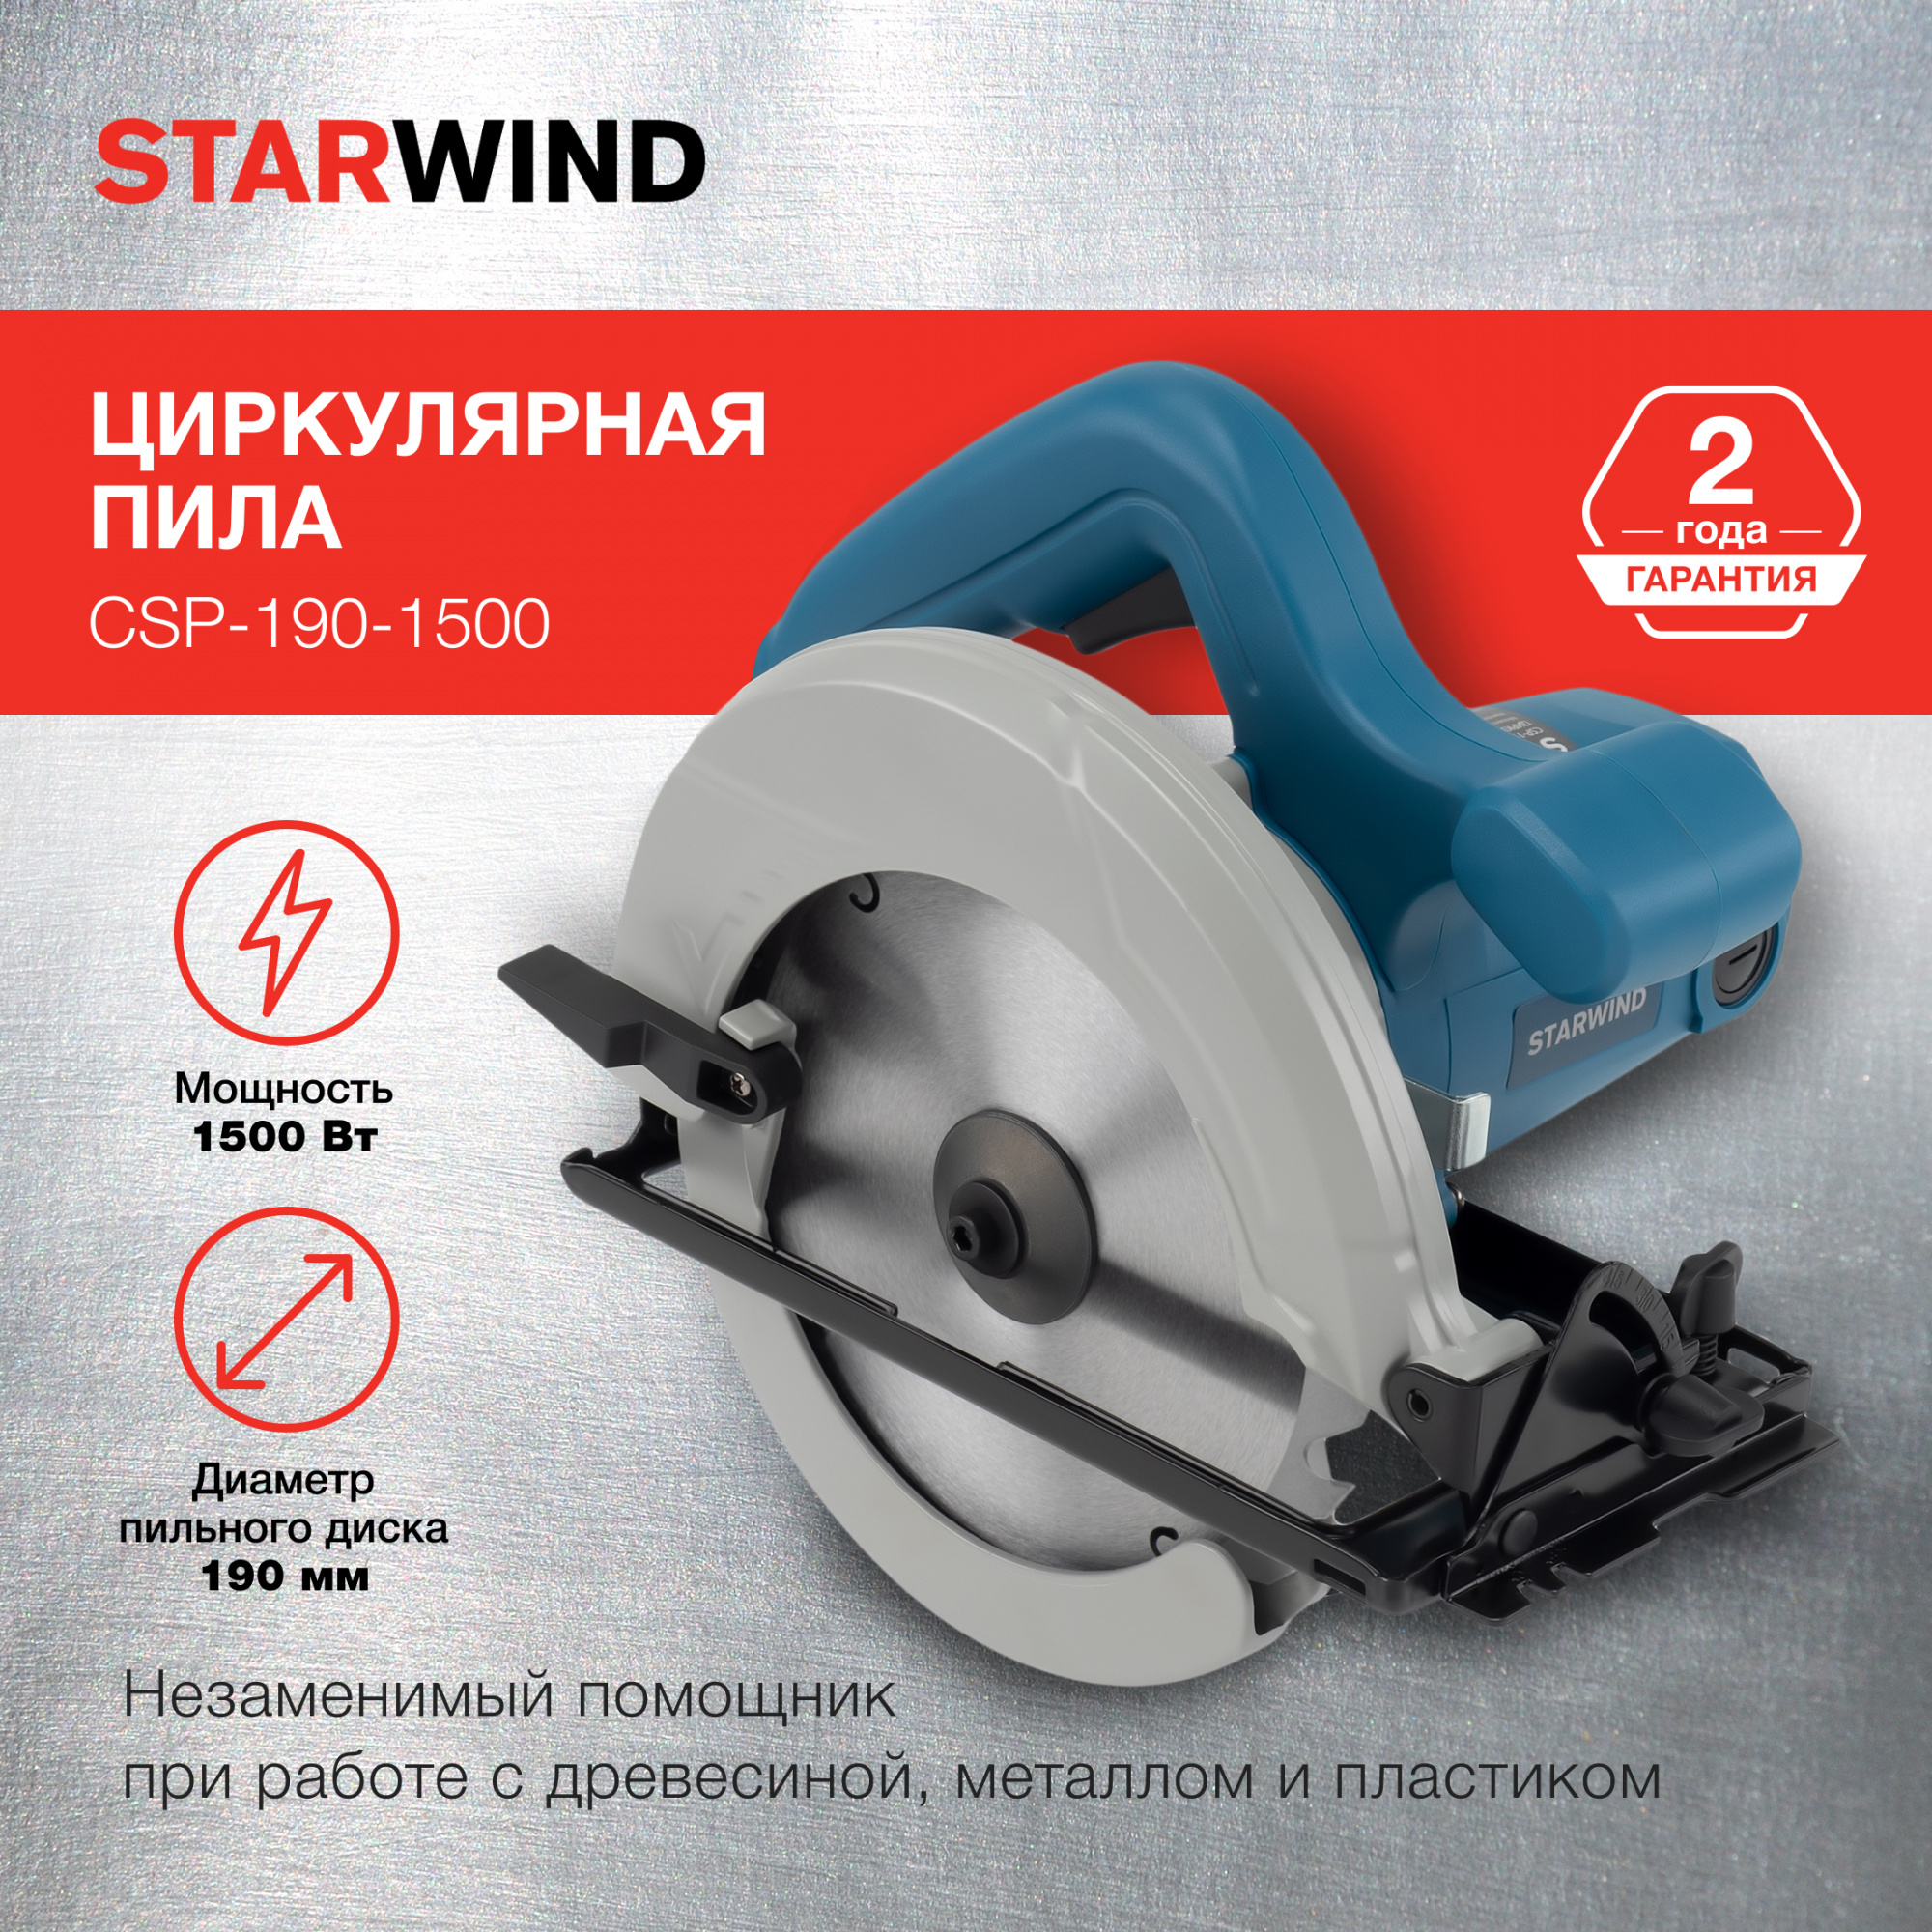 Циркулярная пила Starwind CSP-190-1500 (DMY03-185S) от магазина Старвинд